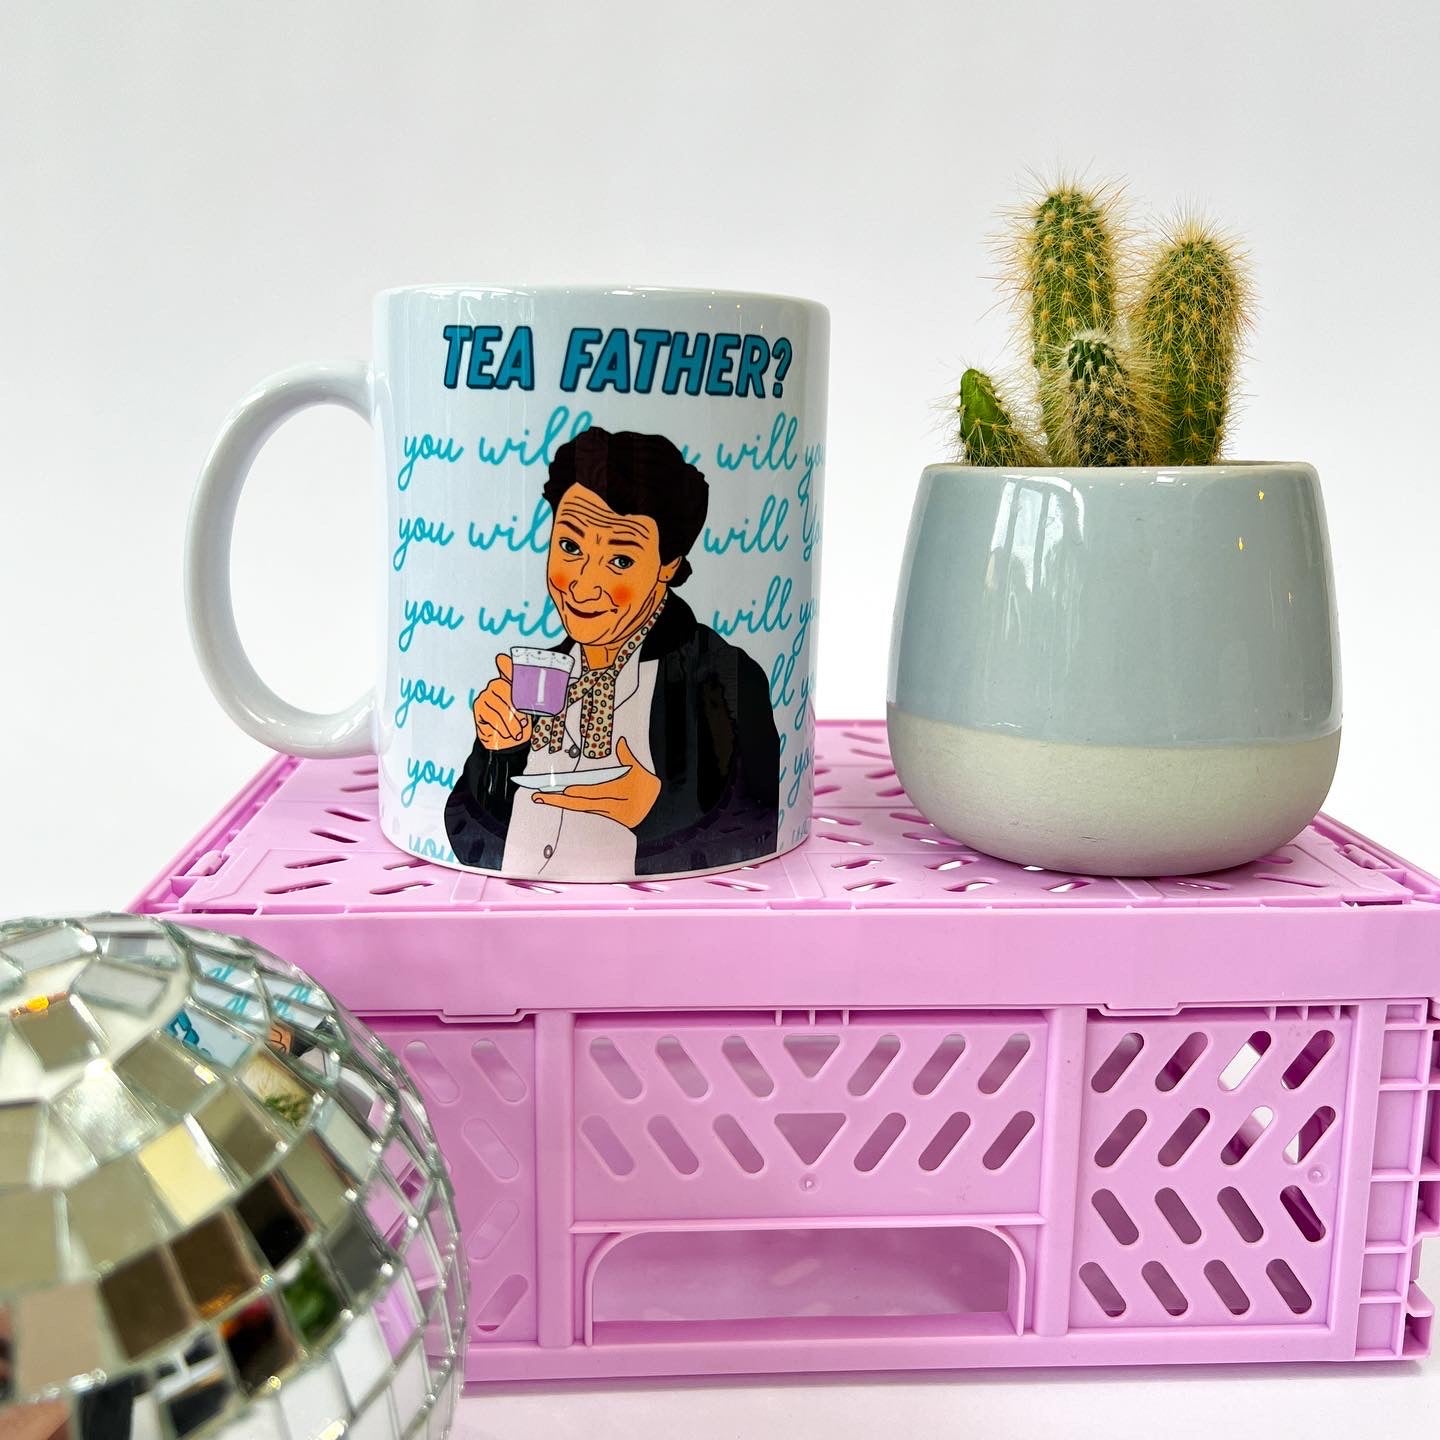 Tea Father? mug